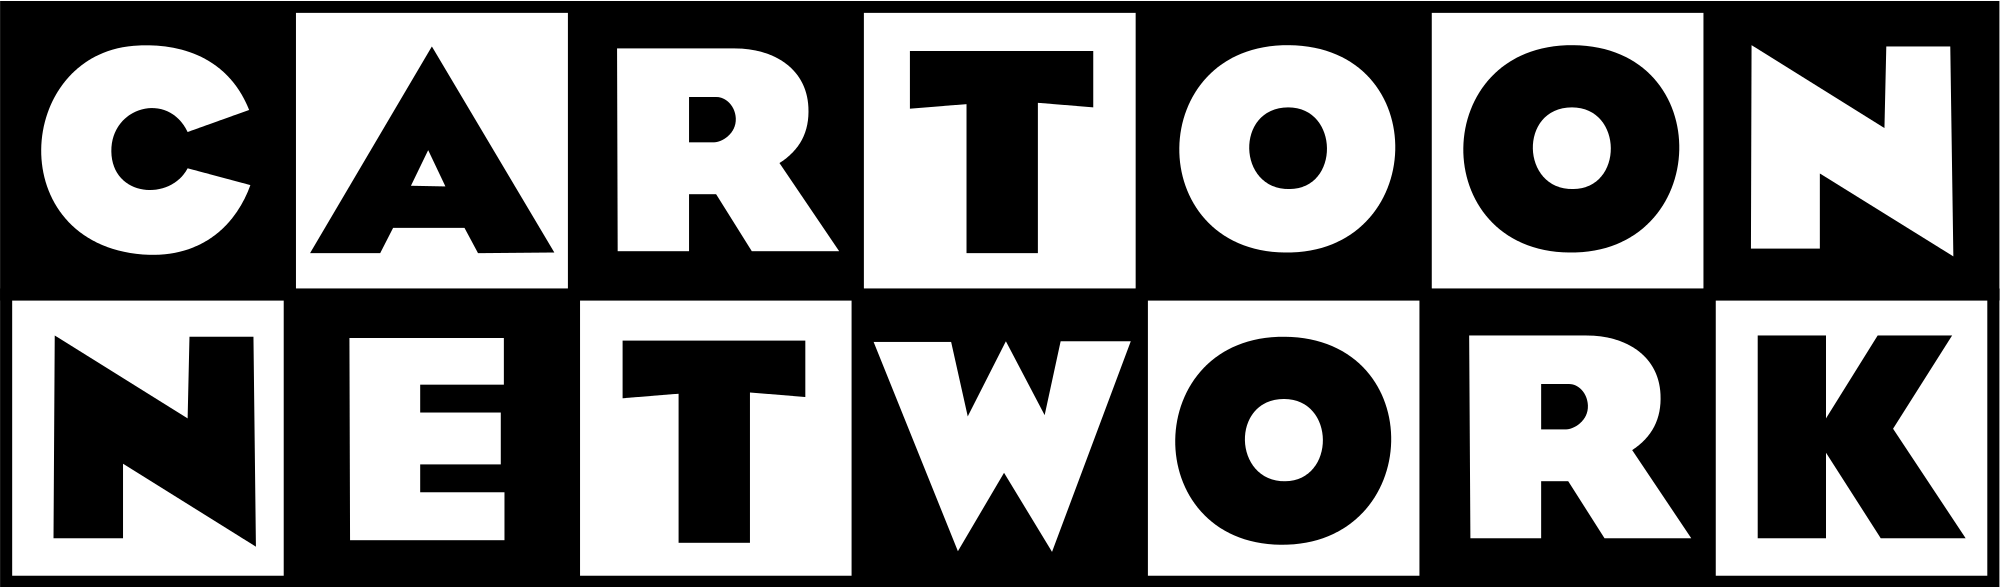 Cartoon Network Logo - File:Cartoon Network 1992 logo.svg - Wikimedia Commons